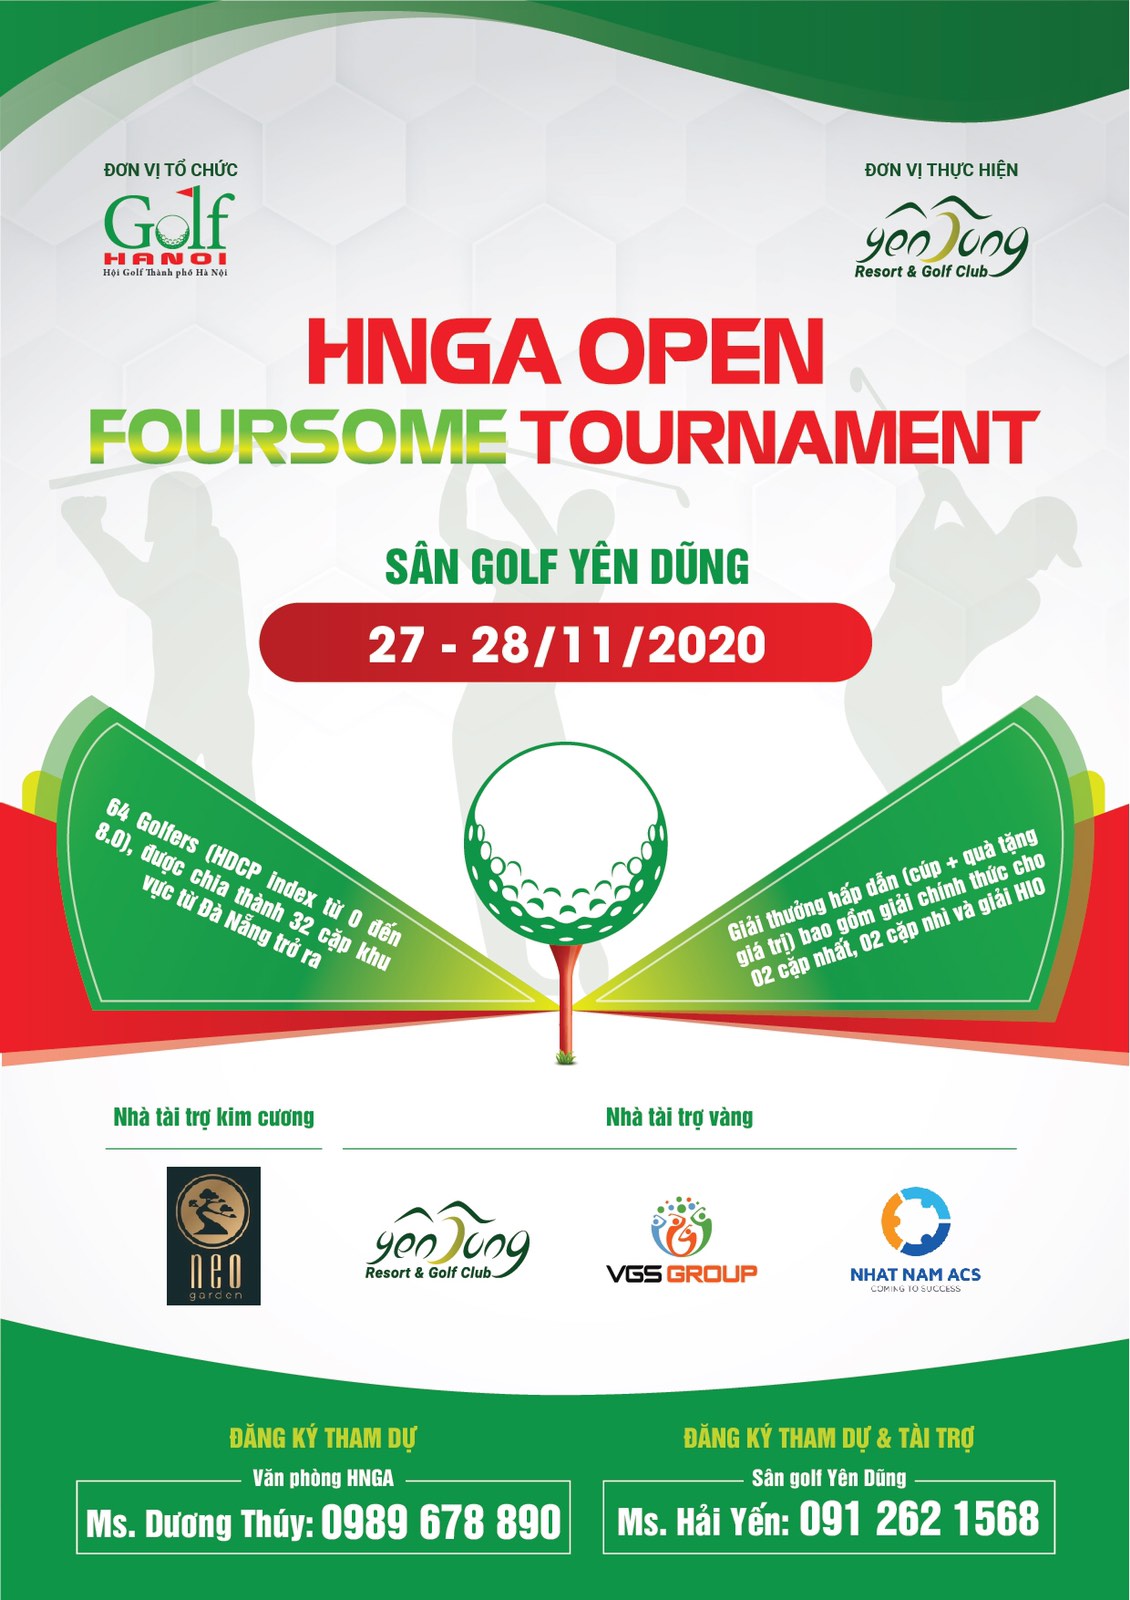 HNGA Open Foursome Tournament - Cuộc đấu giữa các golfer Single Handicap